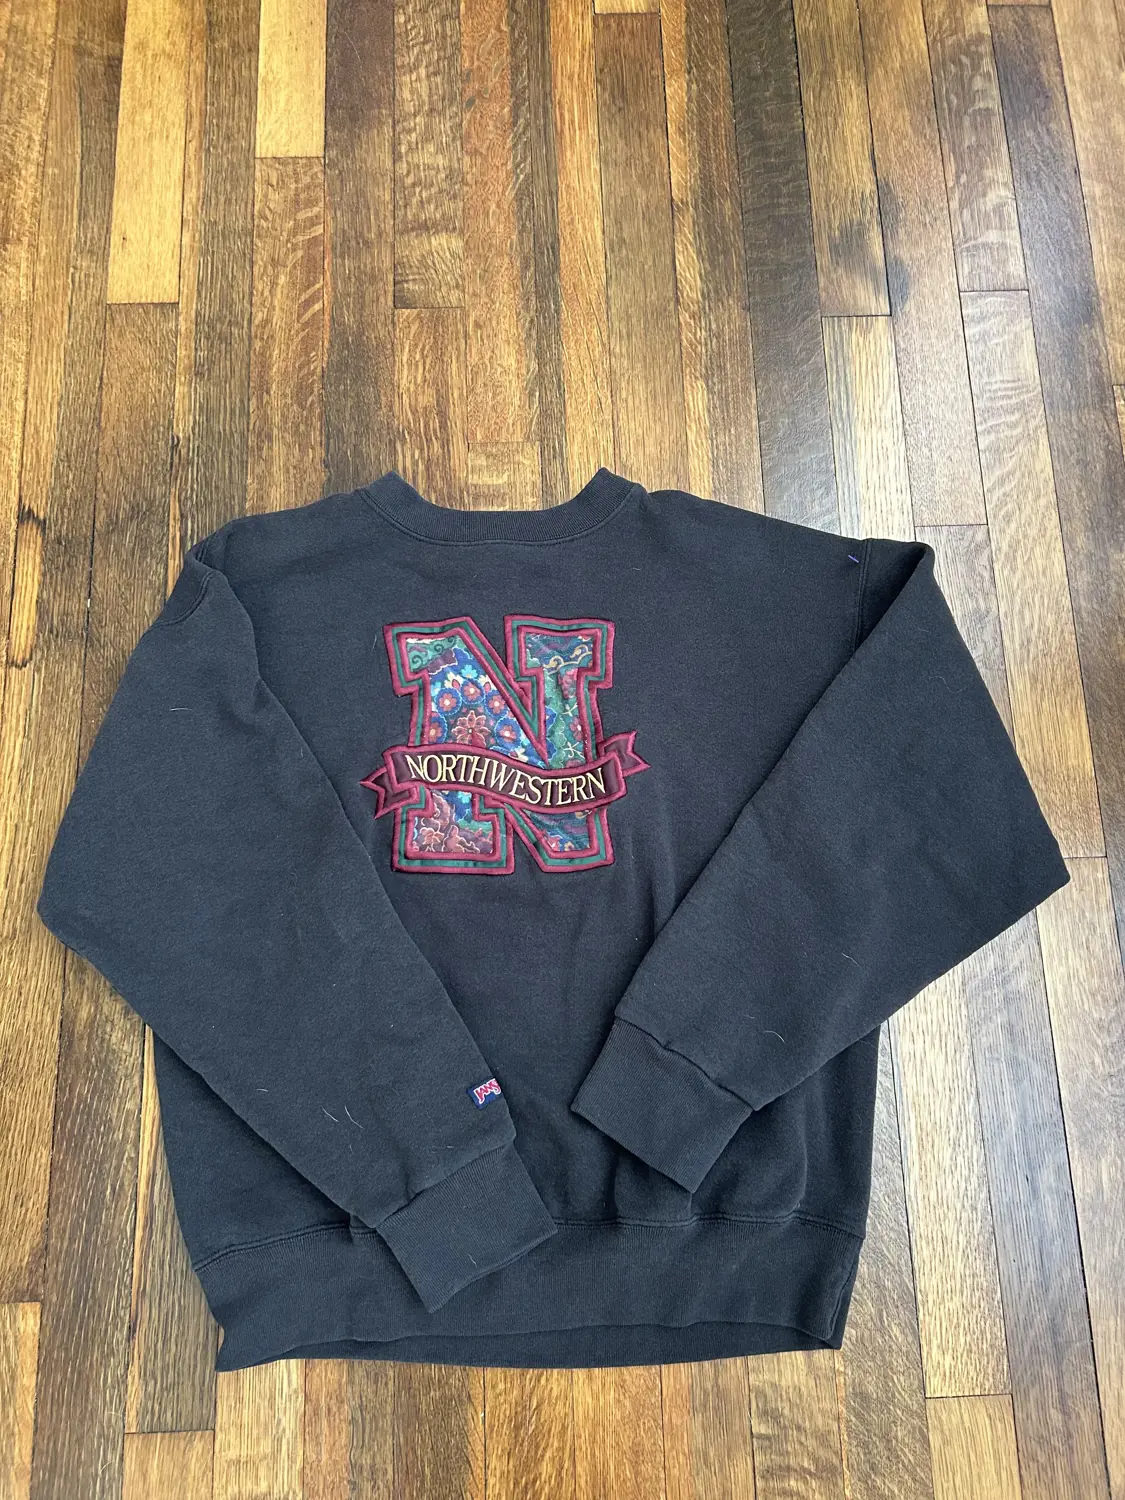 Vintage Northwestern State Sweater